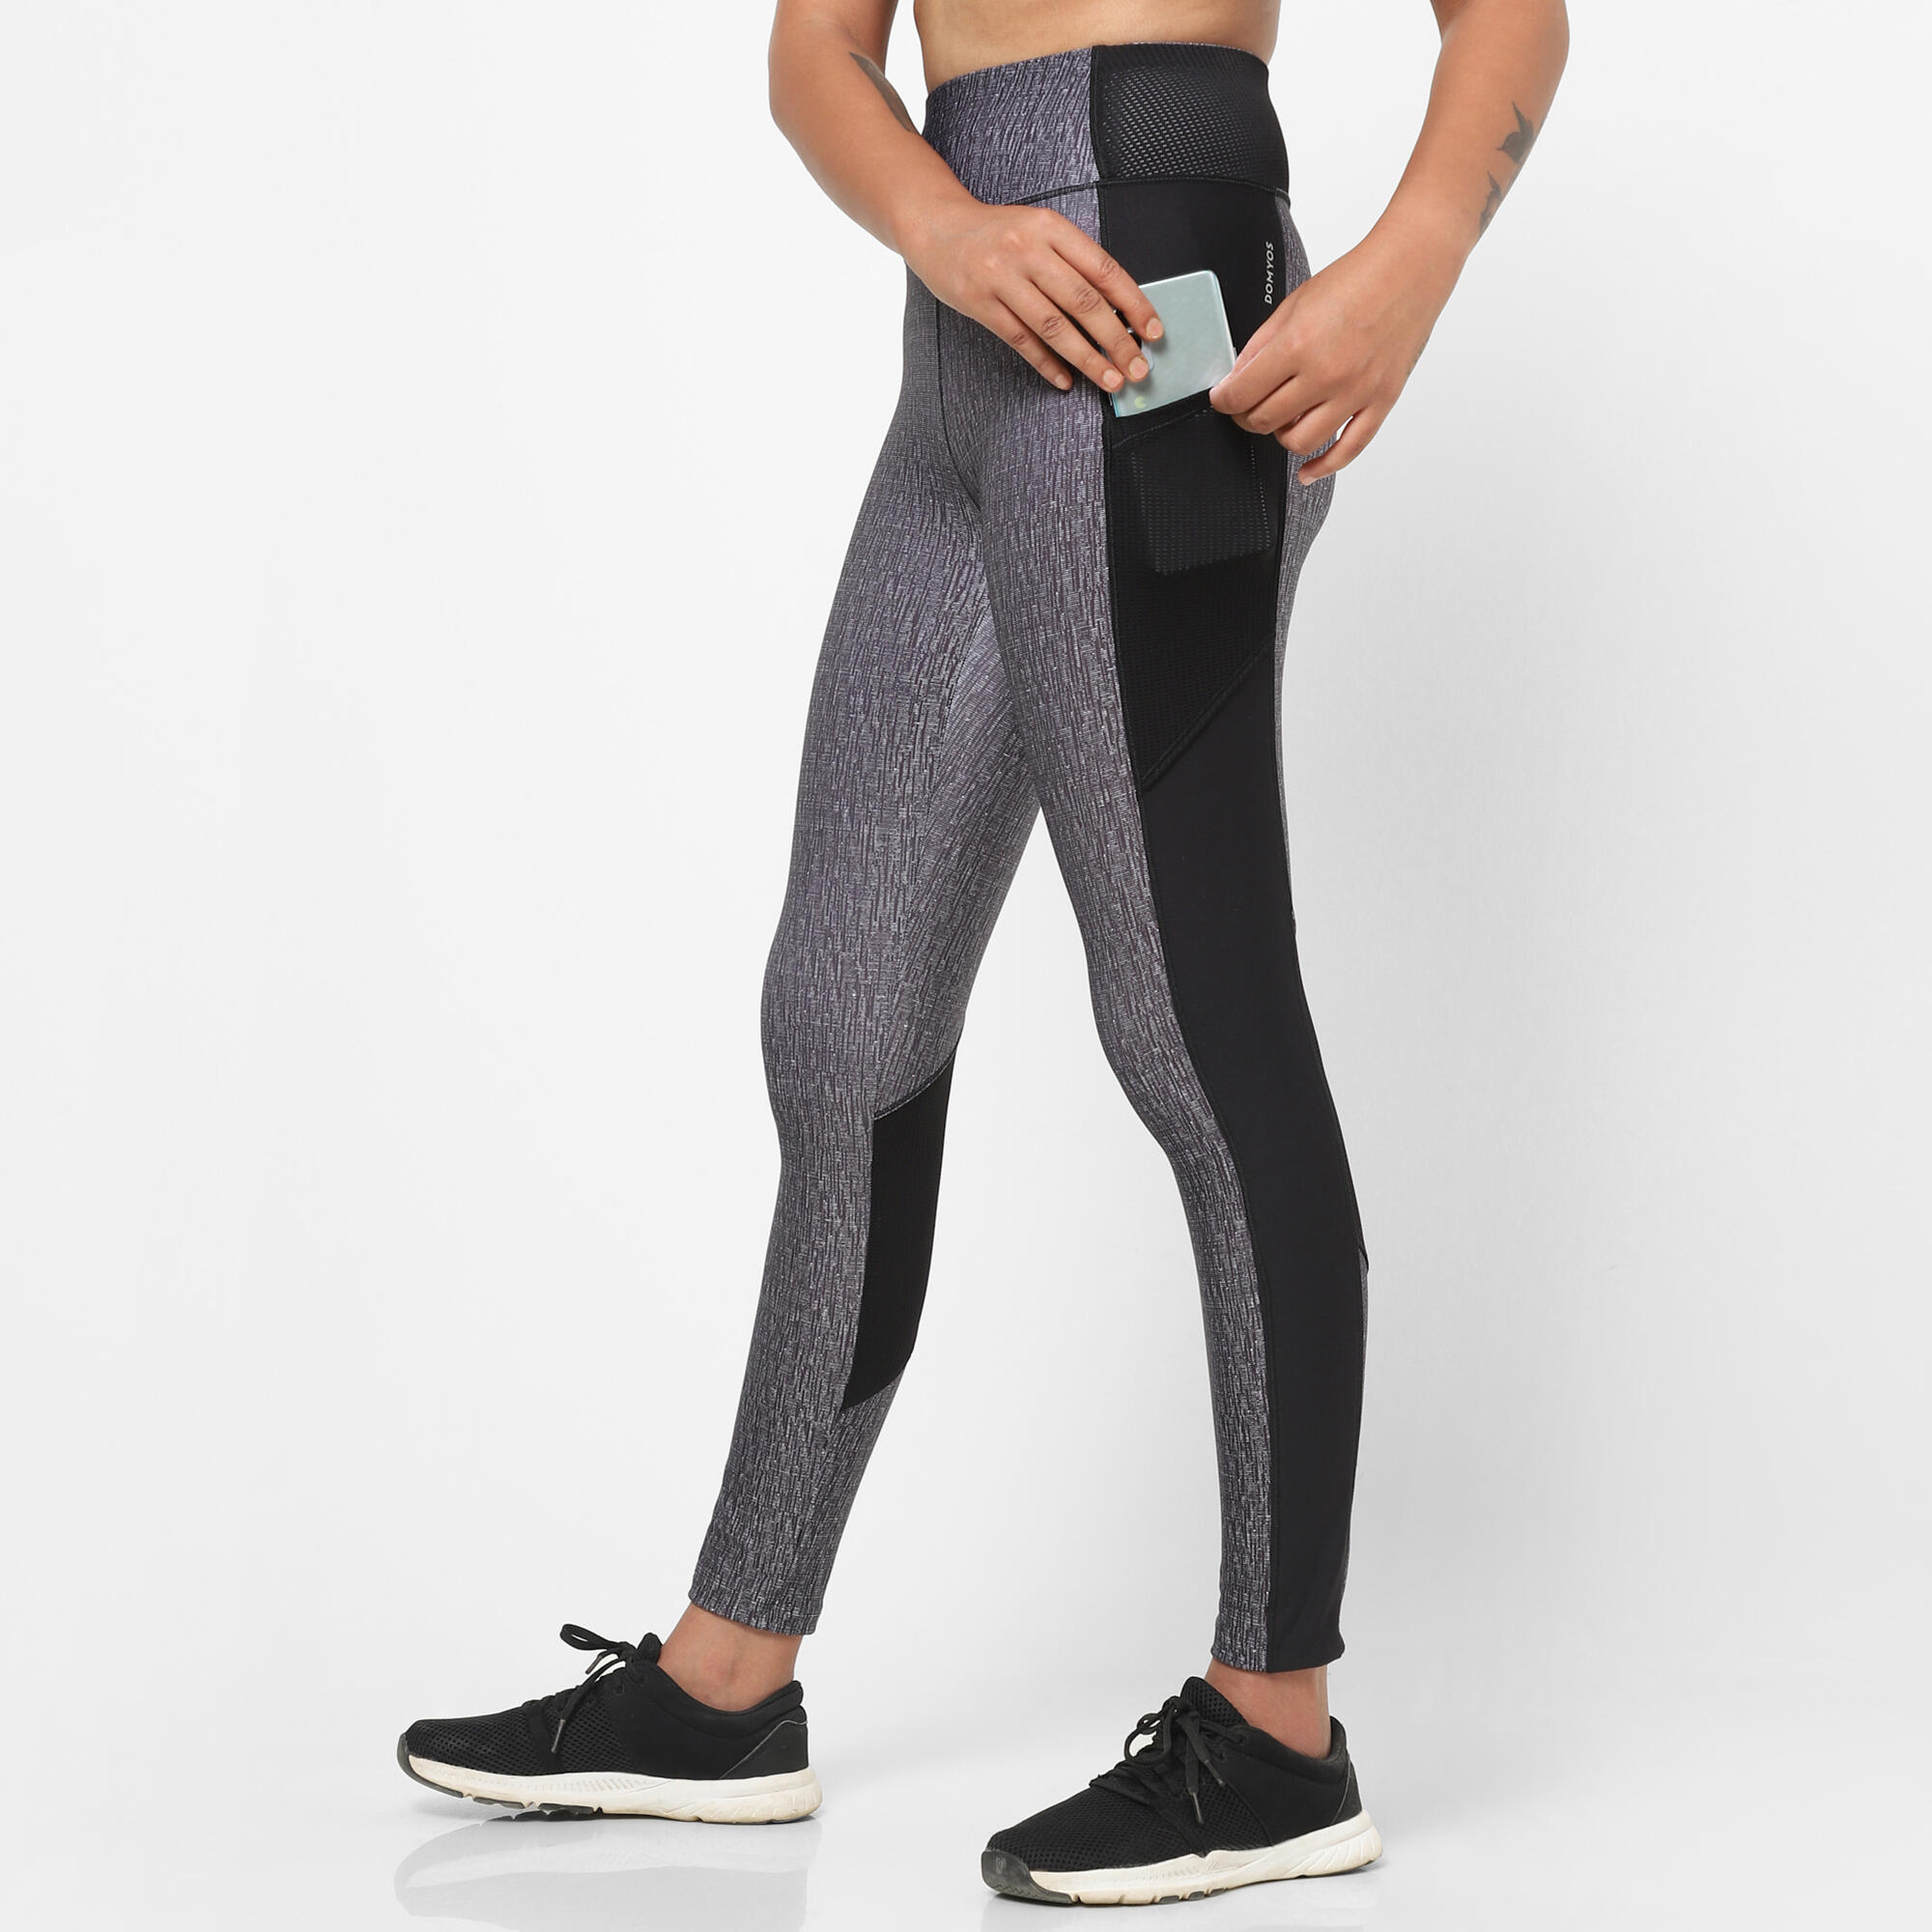 Champion Athletic Leggings Gray & Black Capris One Pocket Gym Yoga Size M |  eBay